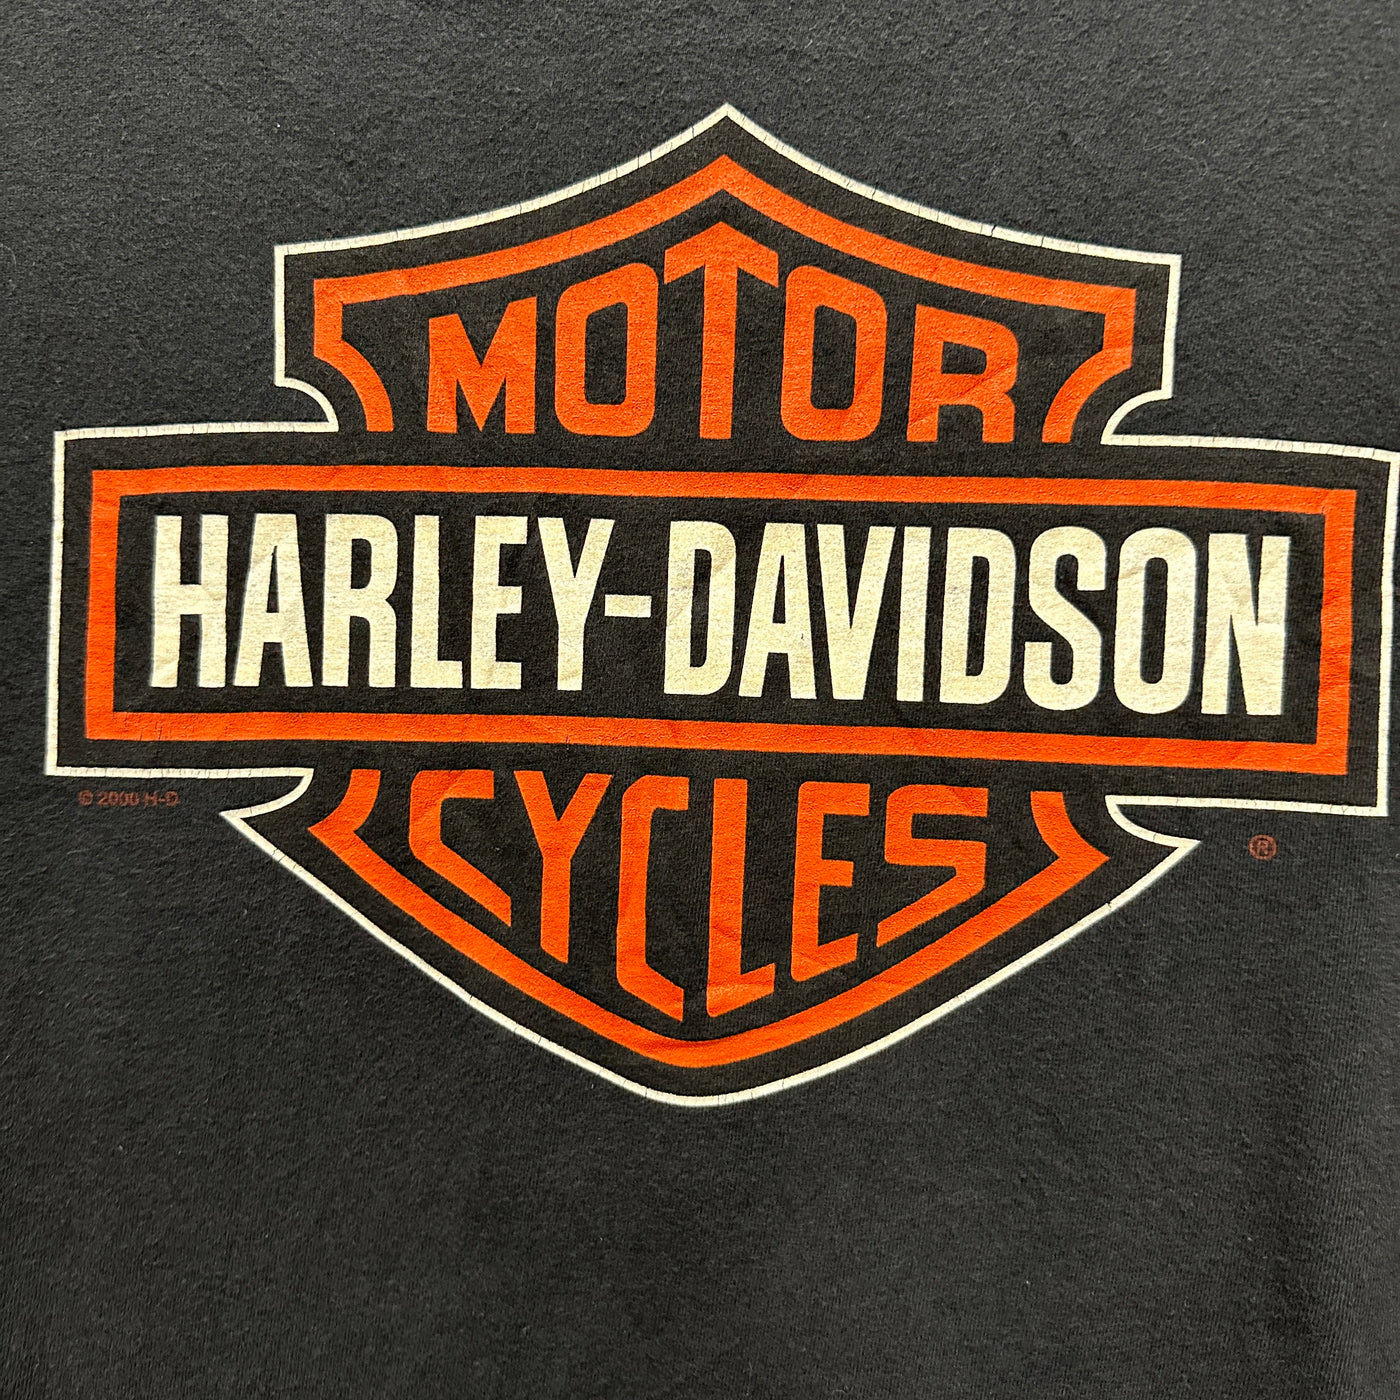 00's Mid Continent Black Harley Davidson T-shirt sz L